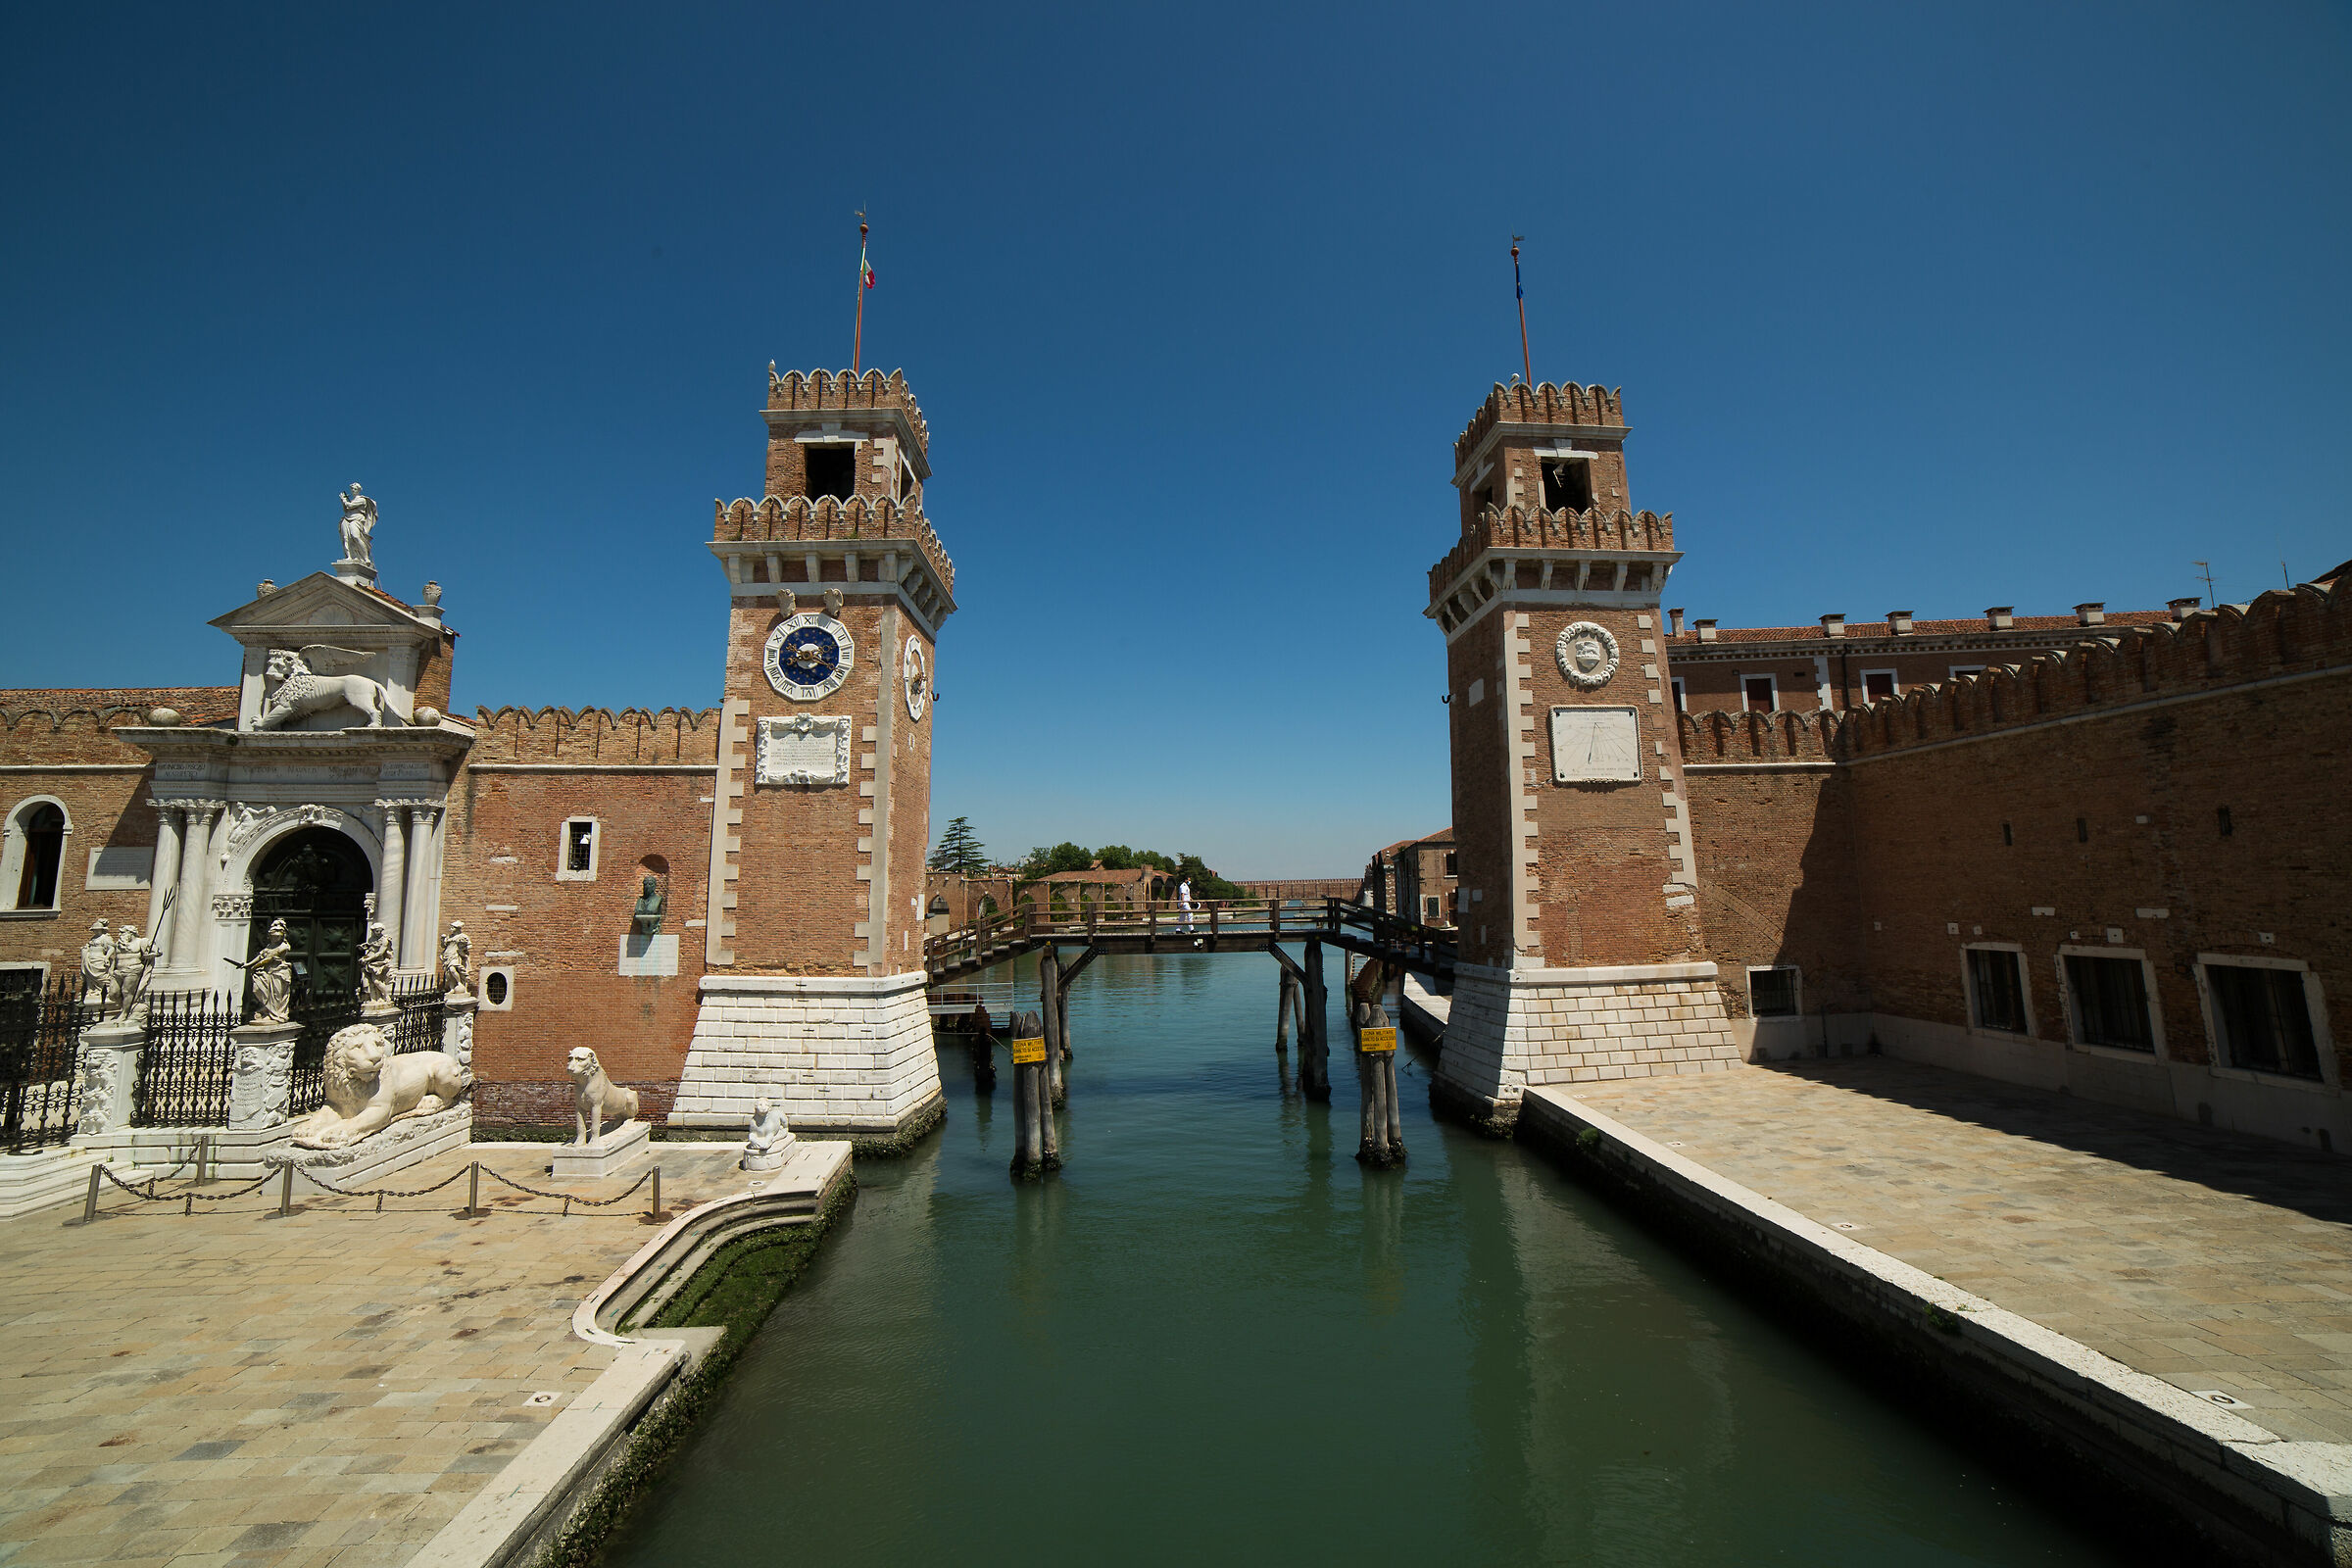 Fragment of Venice's history...